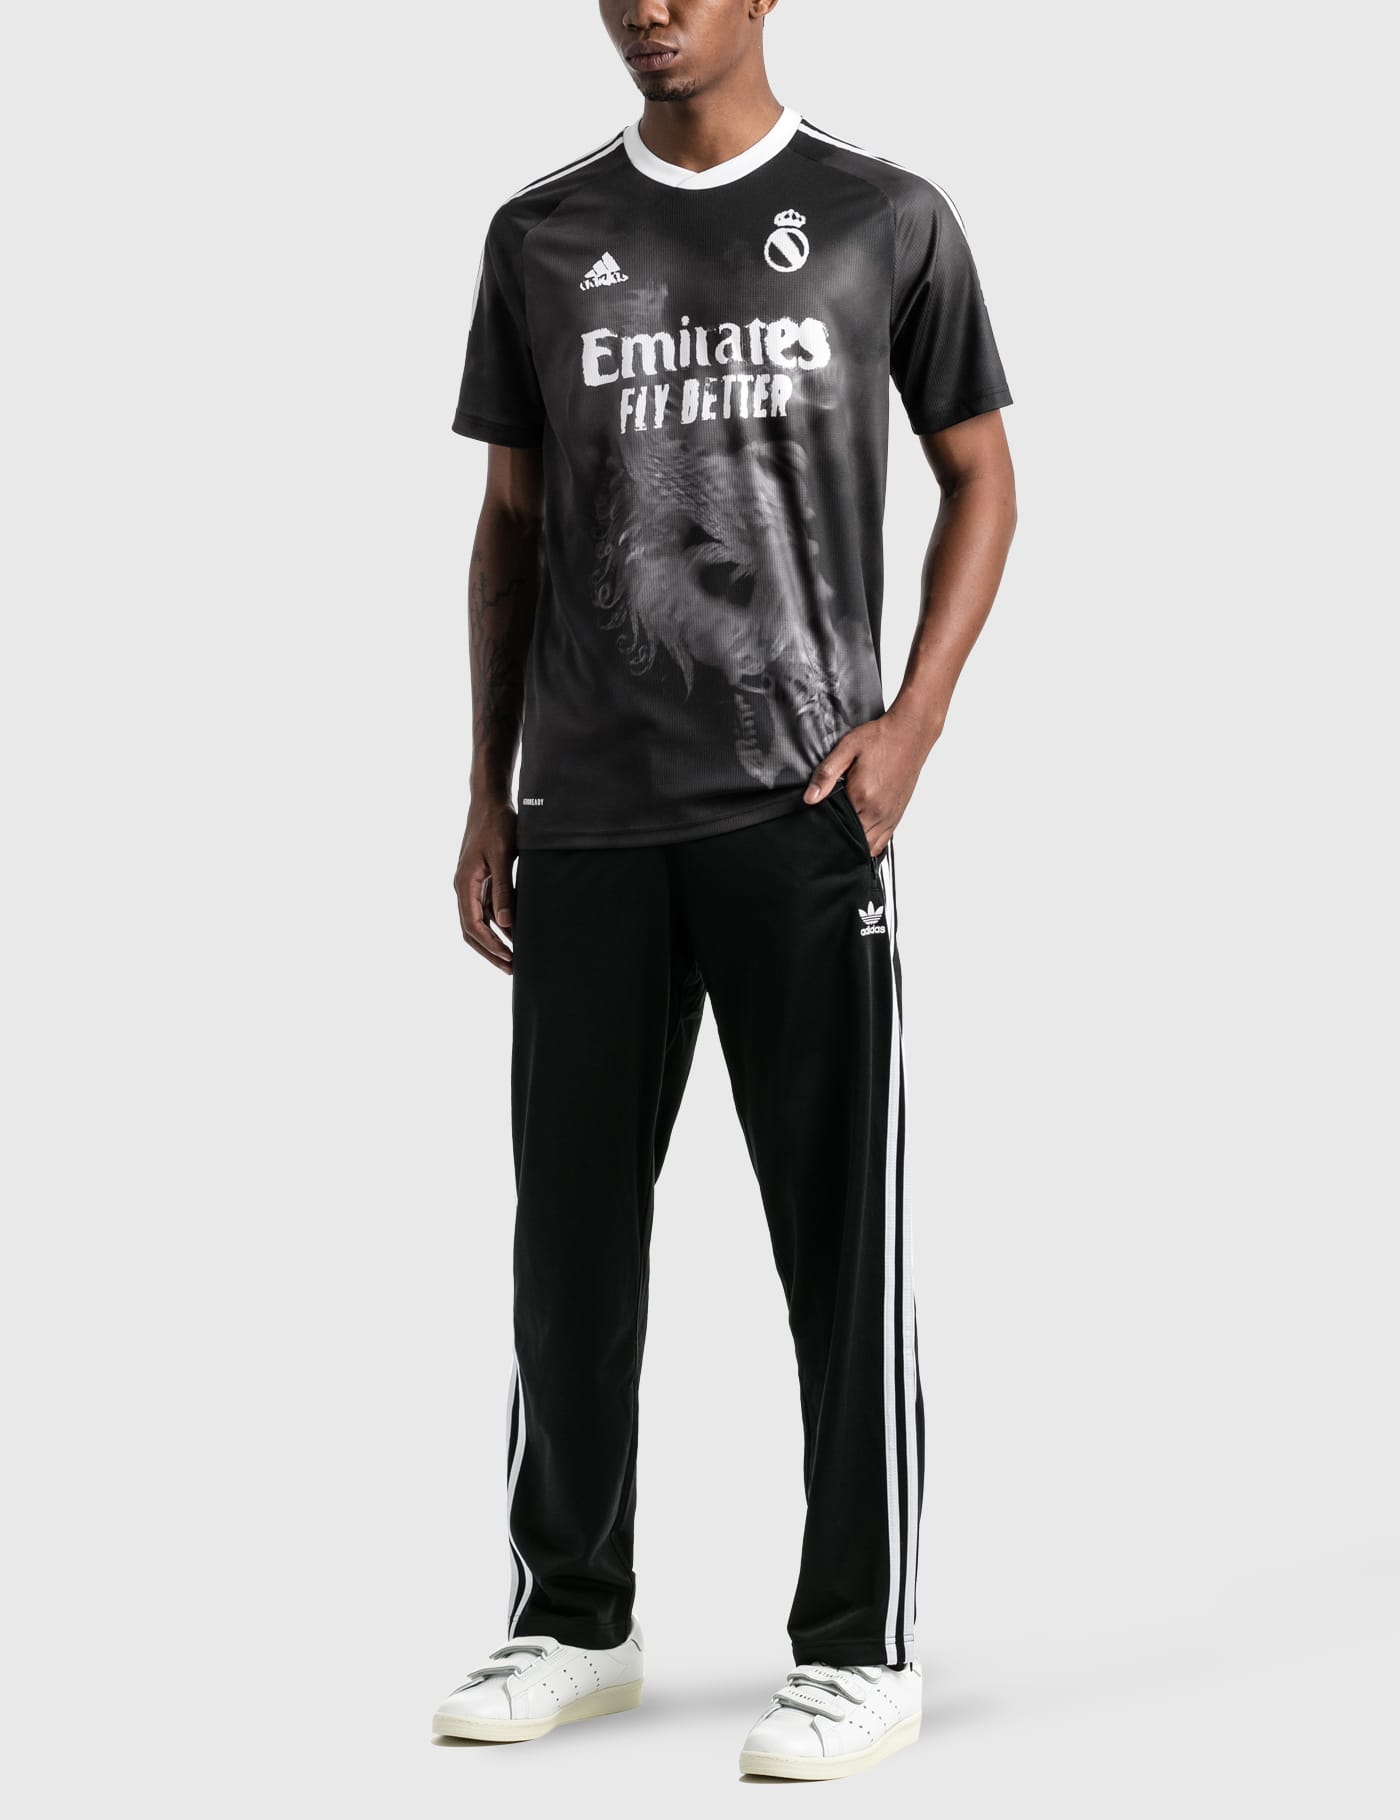 Adidas Originals - Adidas x Pharrell Williams Real Madrid Human